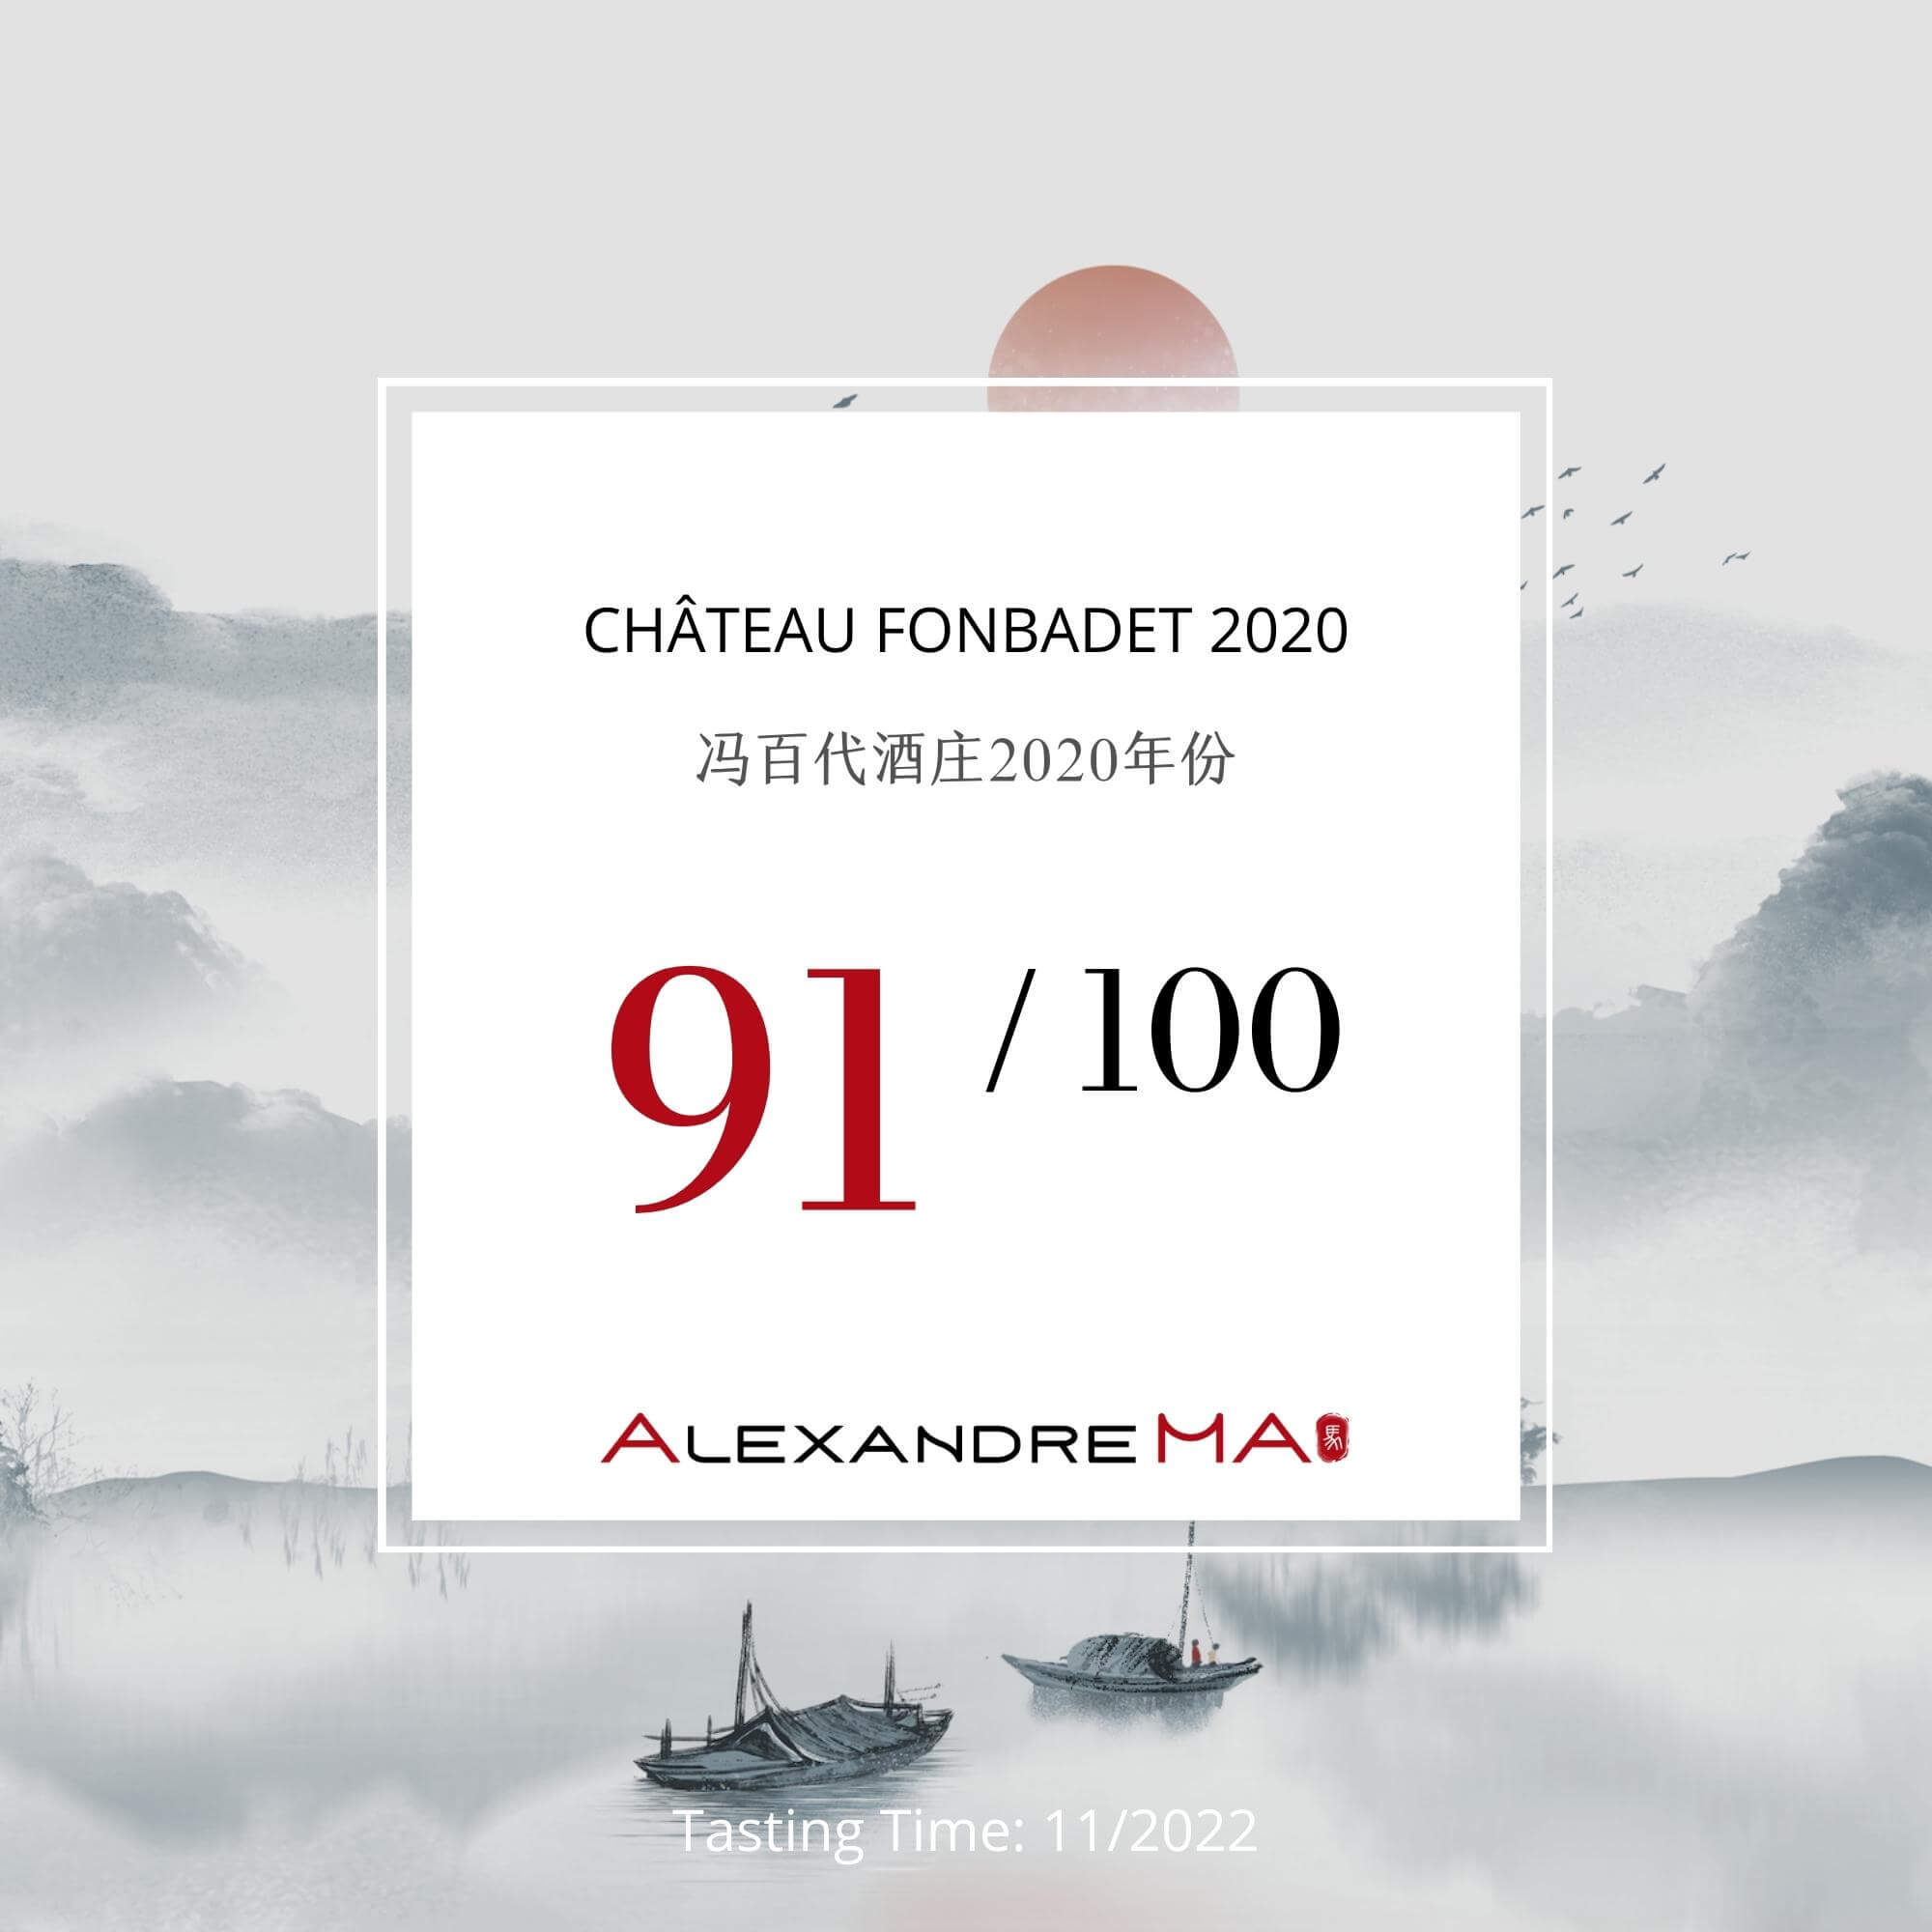 Château Fonbadet 2020 - Alexandre MA